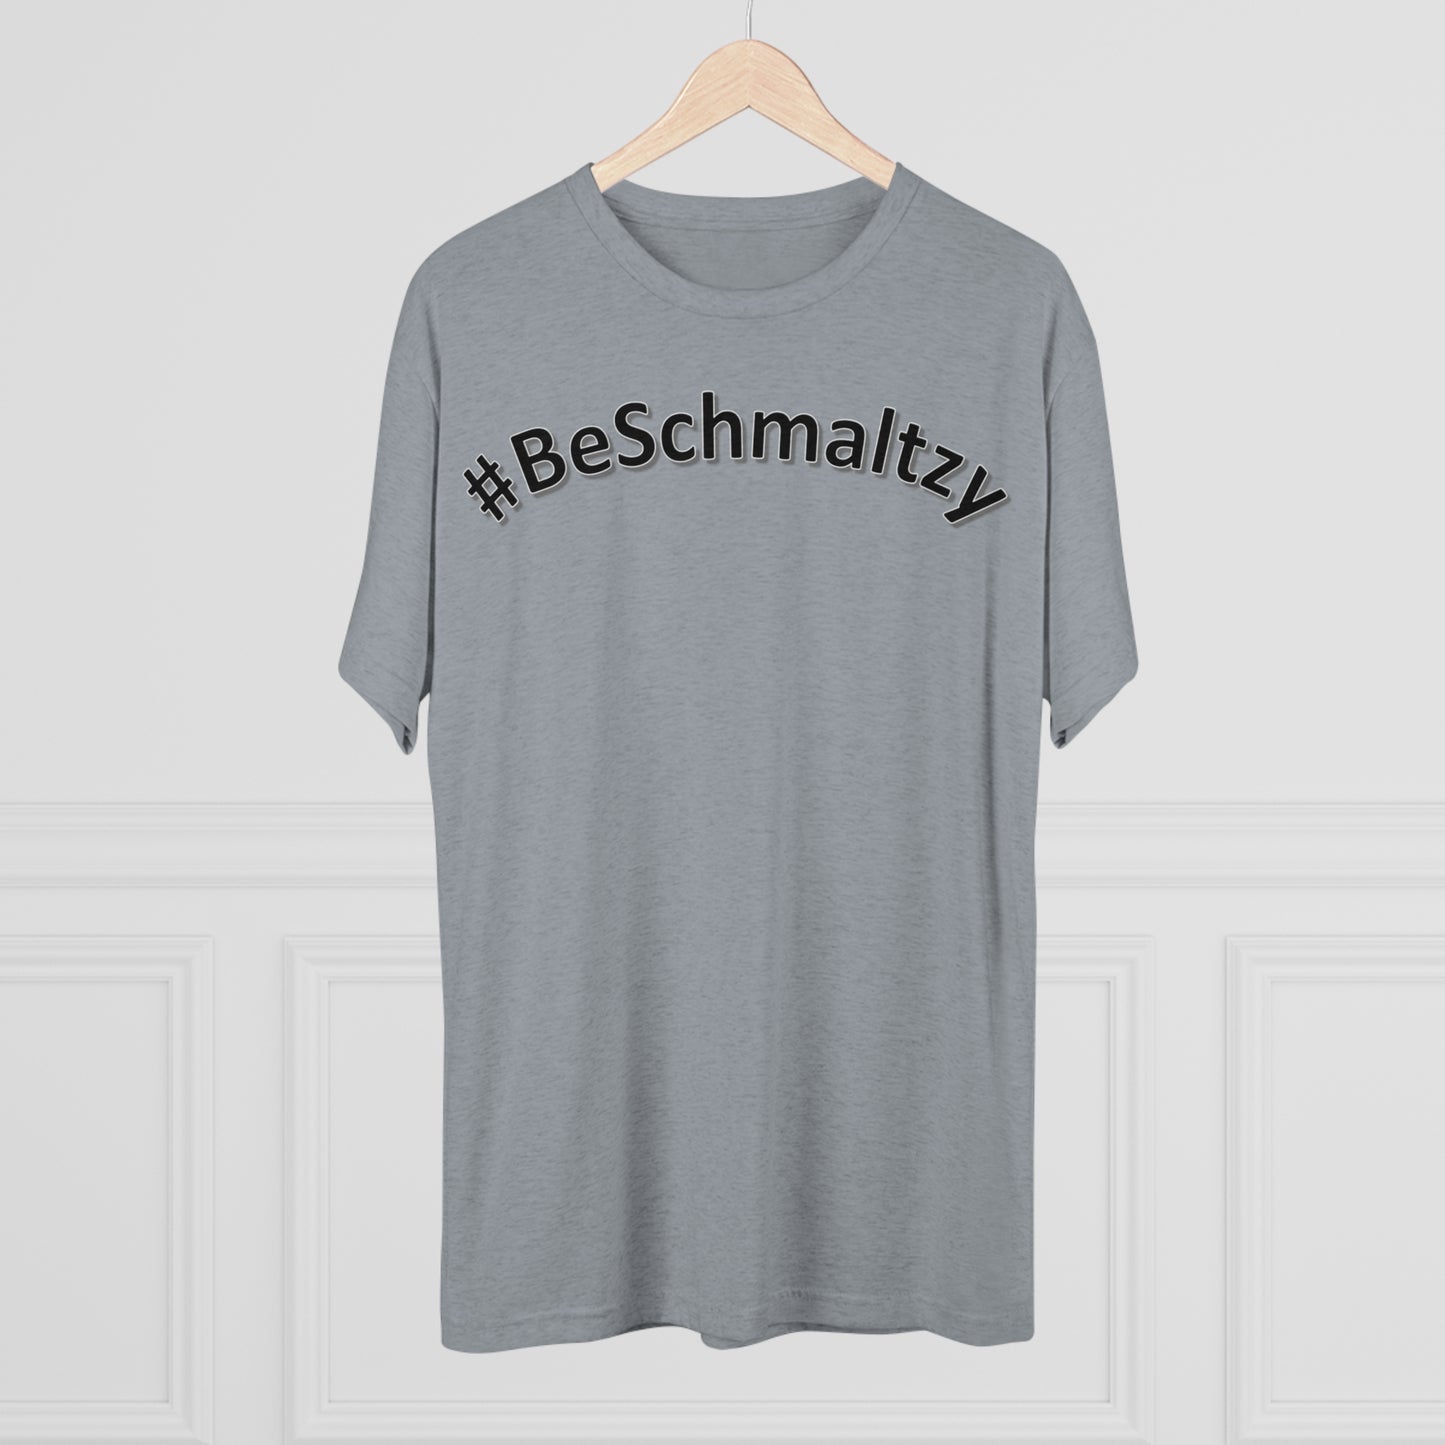 Be Schmaltzy - Tri-Blend T-Shirt